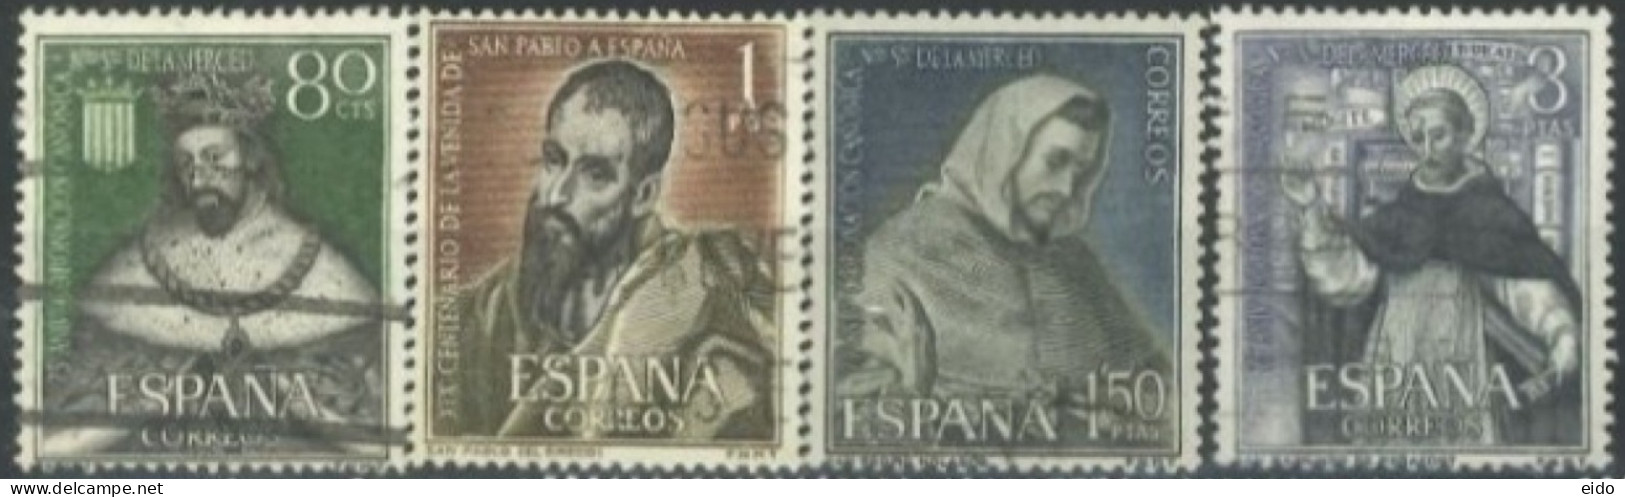 SPAIN, 1963, STAMPS SET OF 4, USED. - Oblitérés